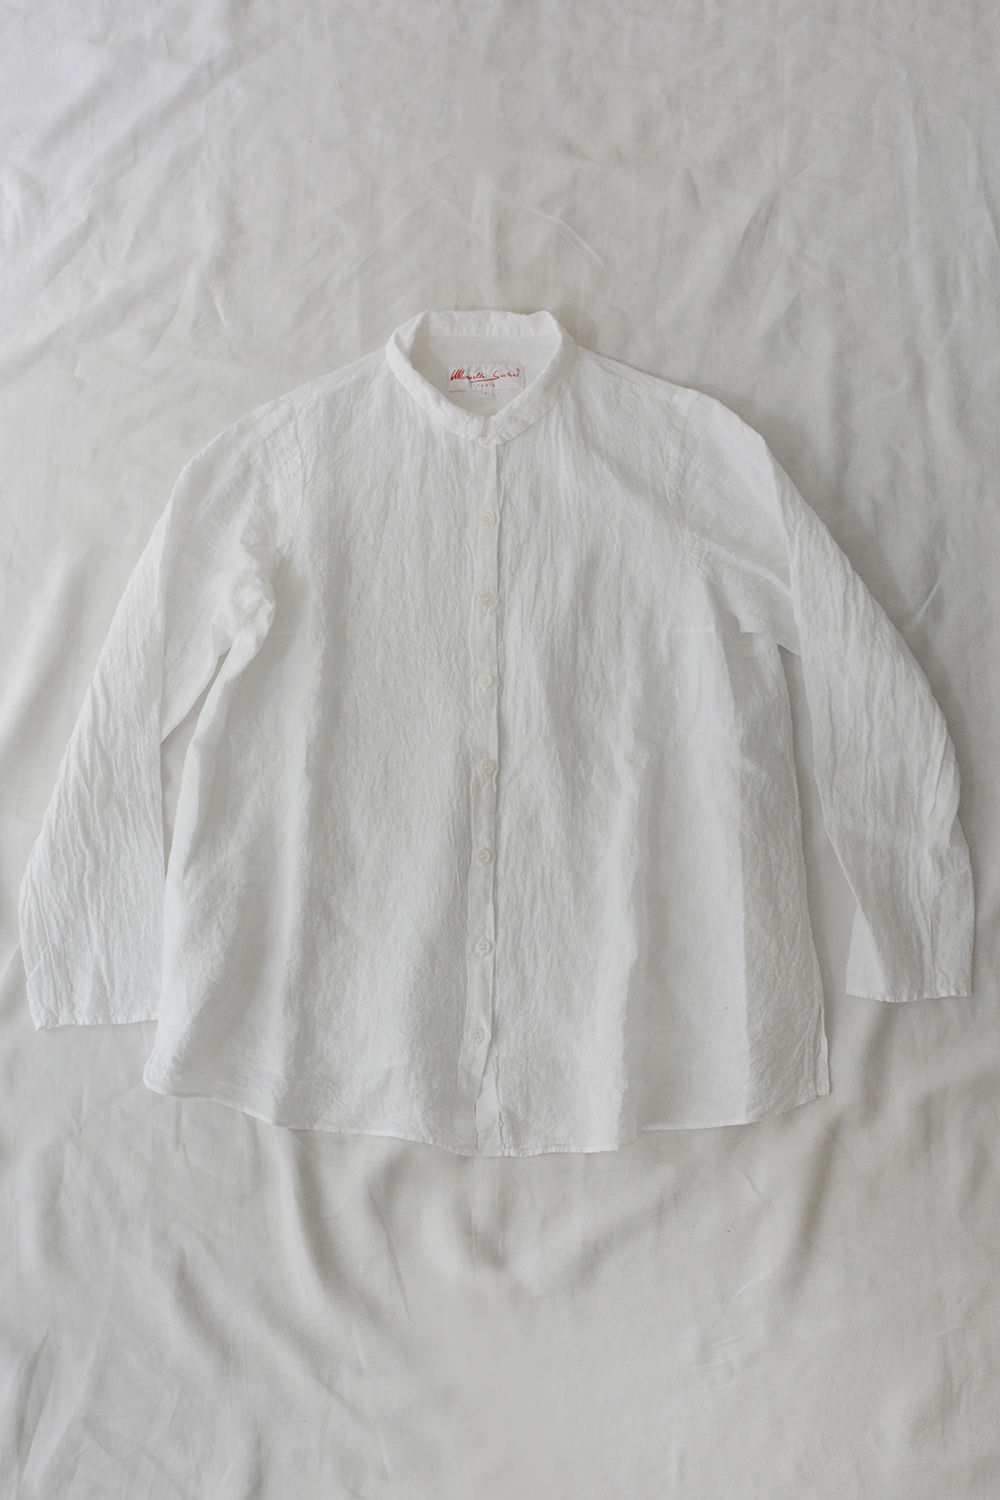 manuelle guibal linen blouse white top picture